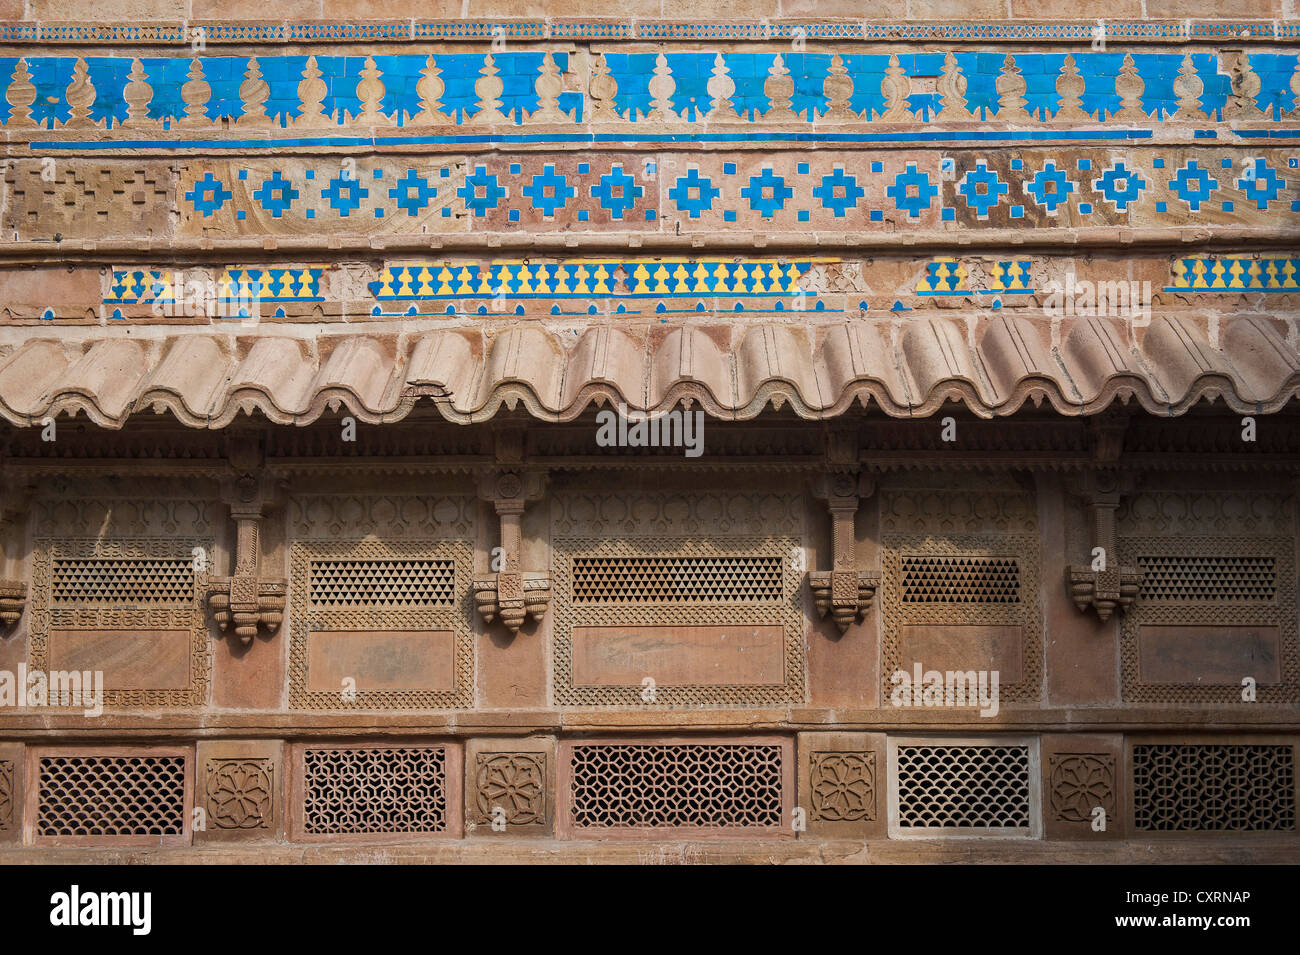 Colourful ceramic tiles adorning a wall, Man Singh Palace, Gwalior Fort or Fortress, Gwalior, Madhya Pradesh, India, Asia Stock Photo